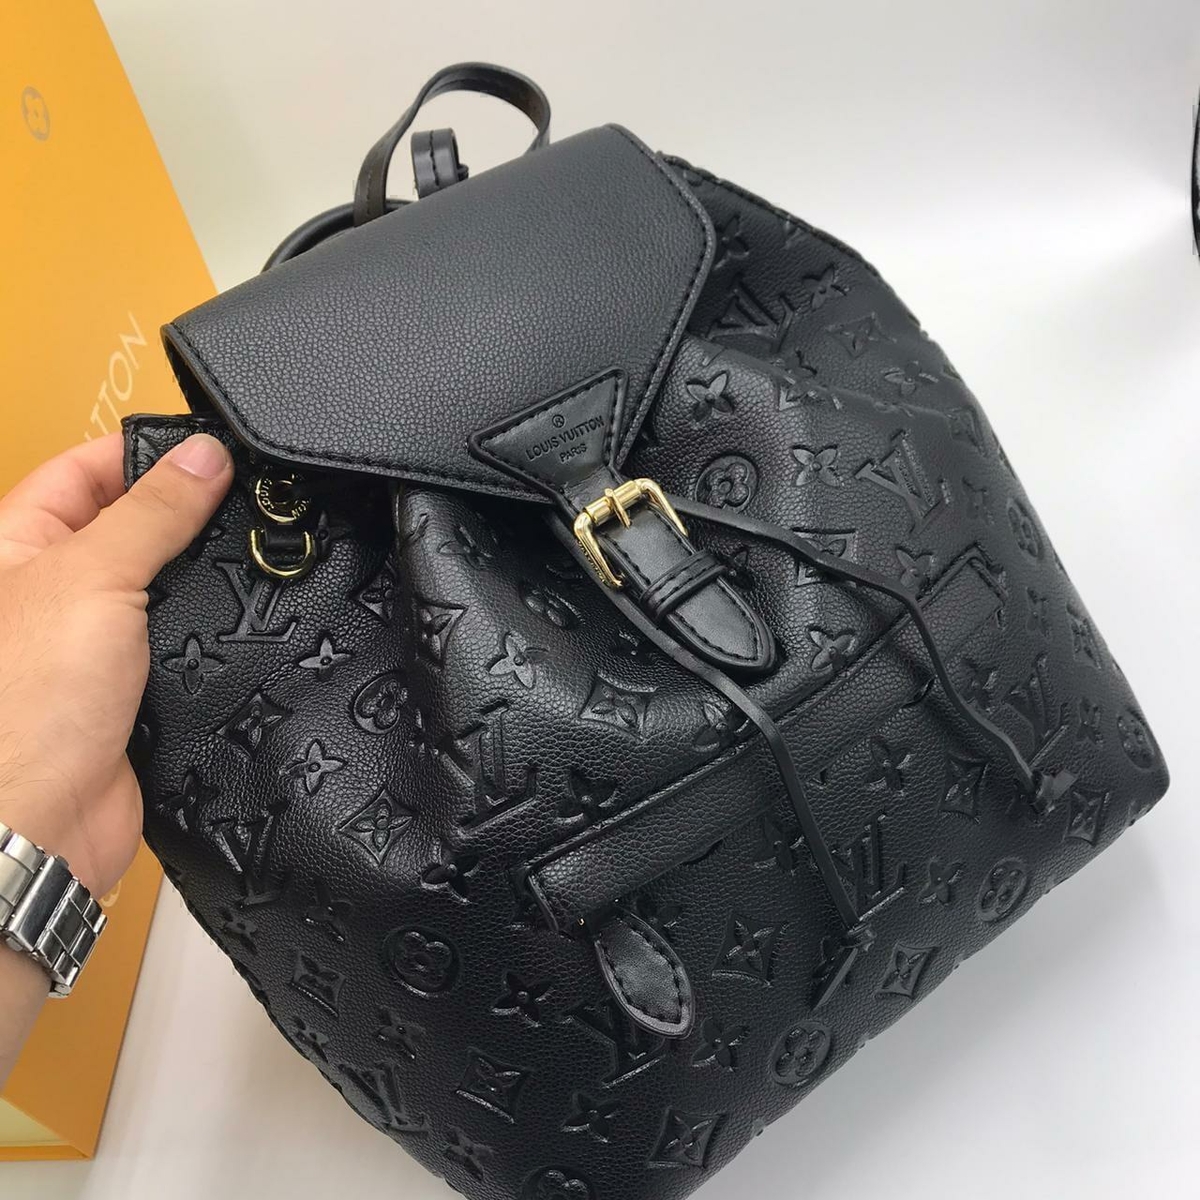 Louis Vuitton рюкзак #1 в «Globestyle» арт.2559UY